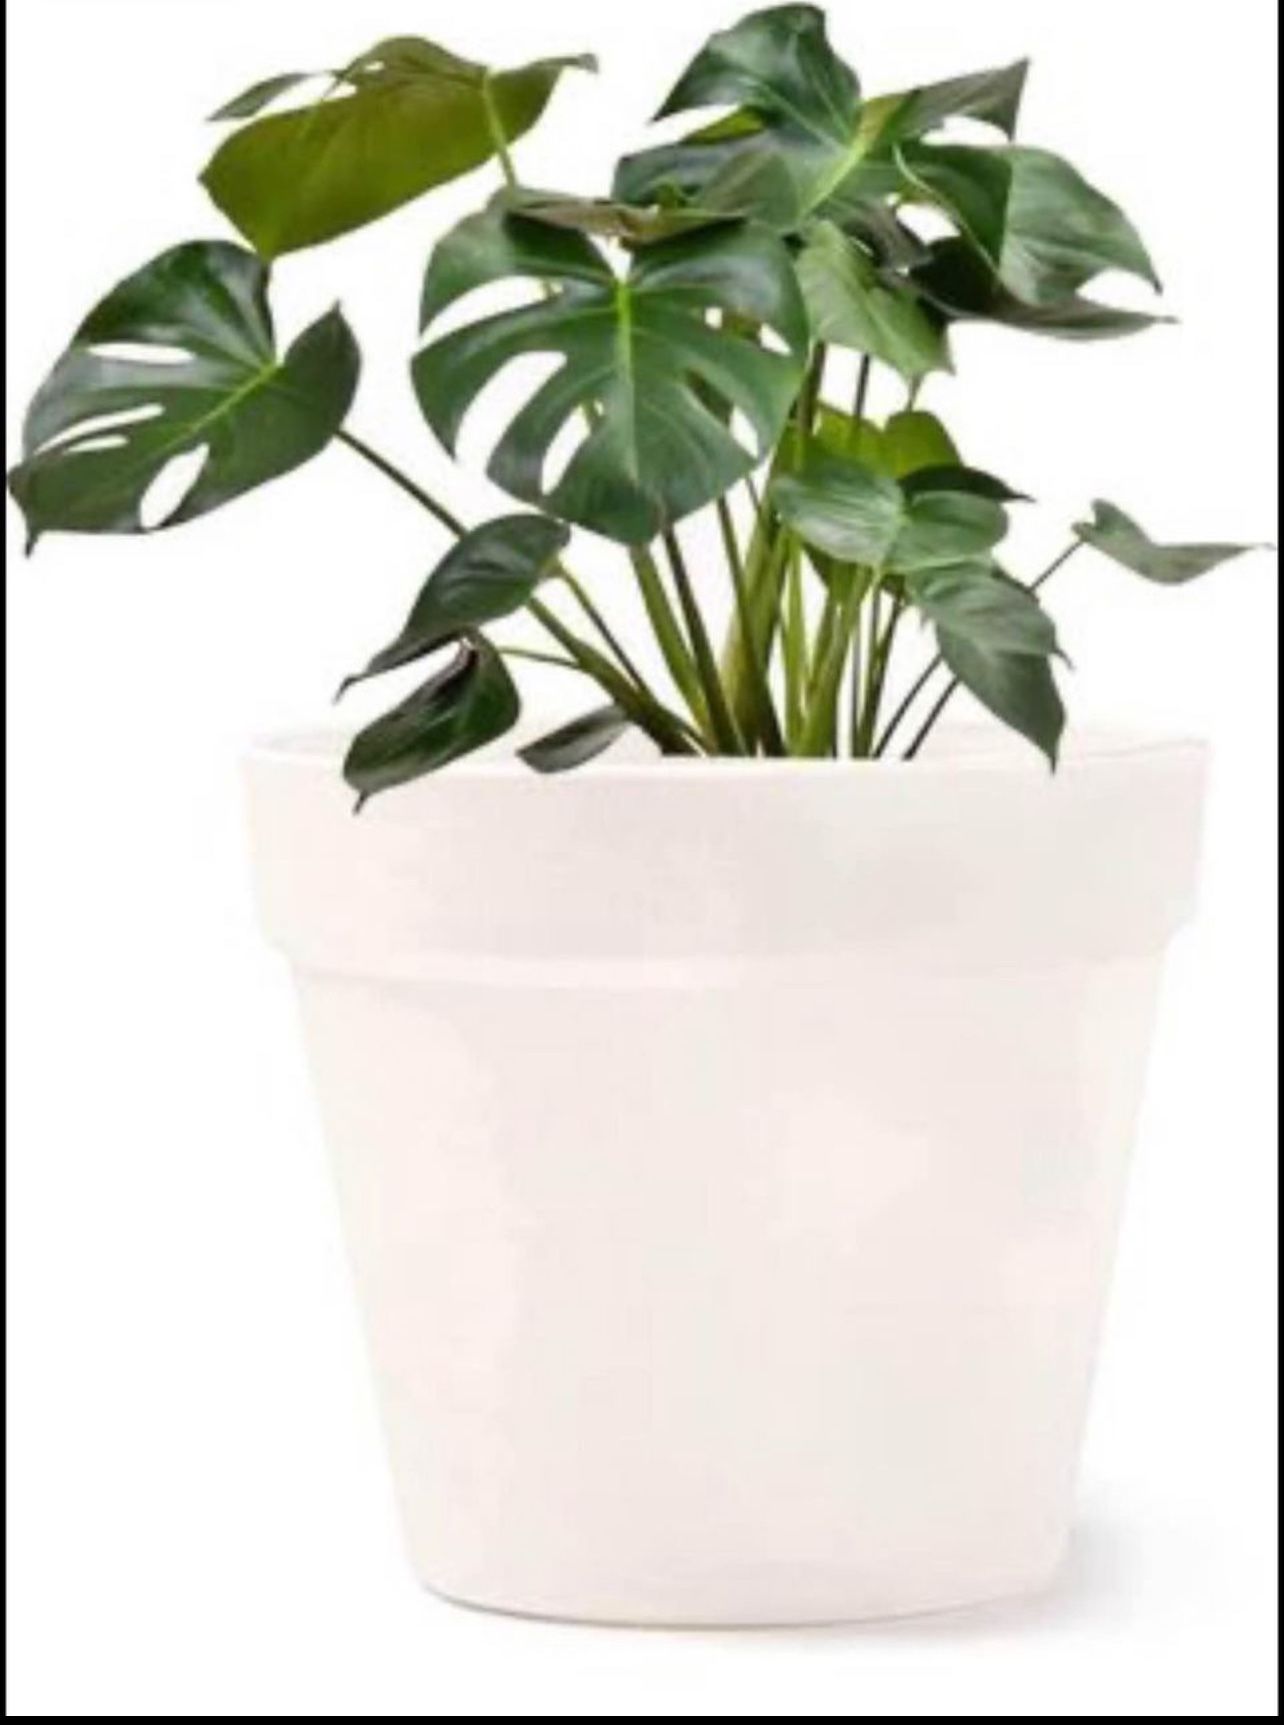 Brandnew Plant Flower Pot, 6 inch Plastic Planter, for Tabletop Plant & Hanging Planter - Pack of 6